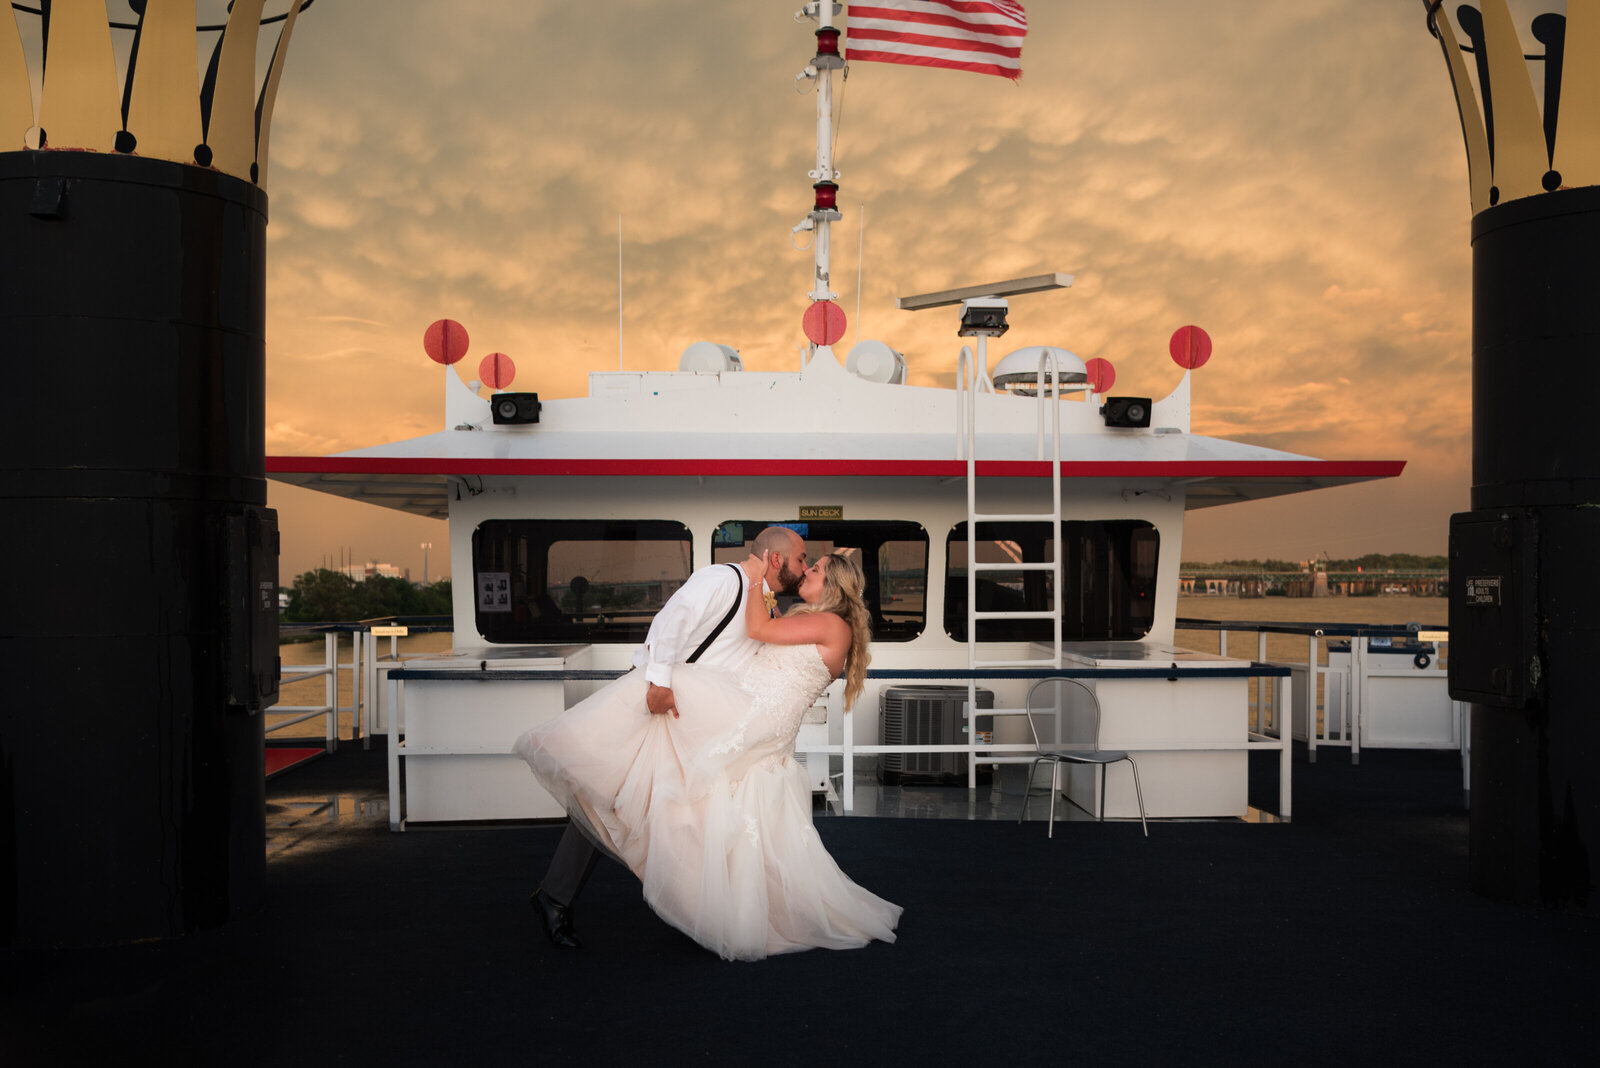 Groom dips bride on river boat under sunset and flag